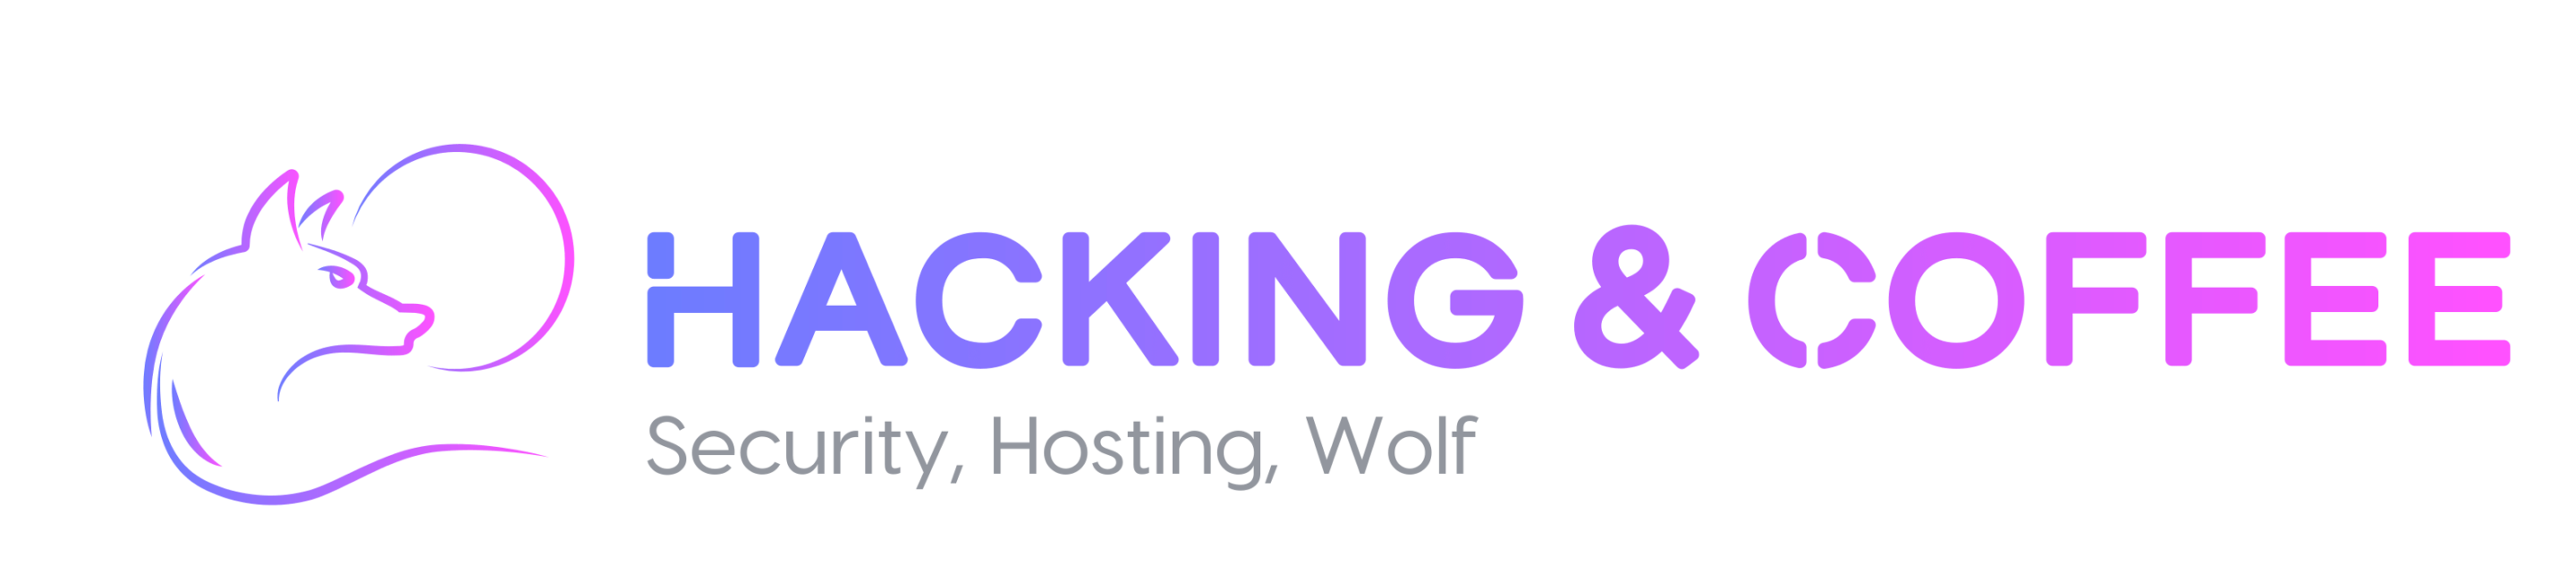 Hacking & Coffee, LLC Logo-min